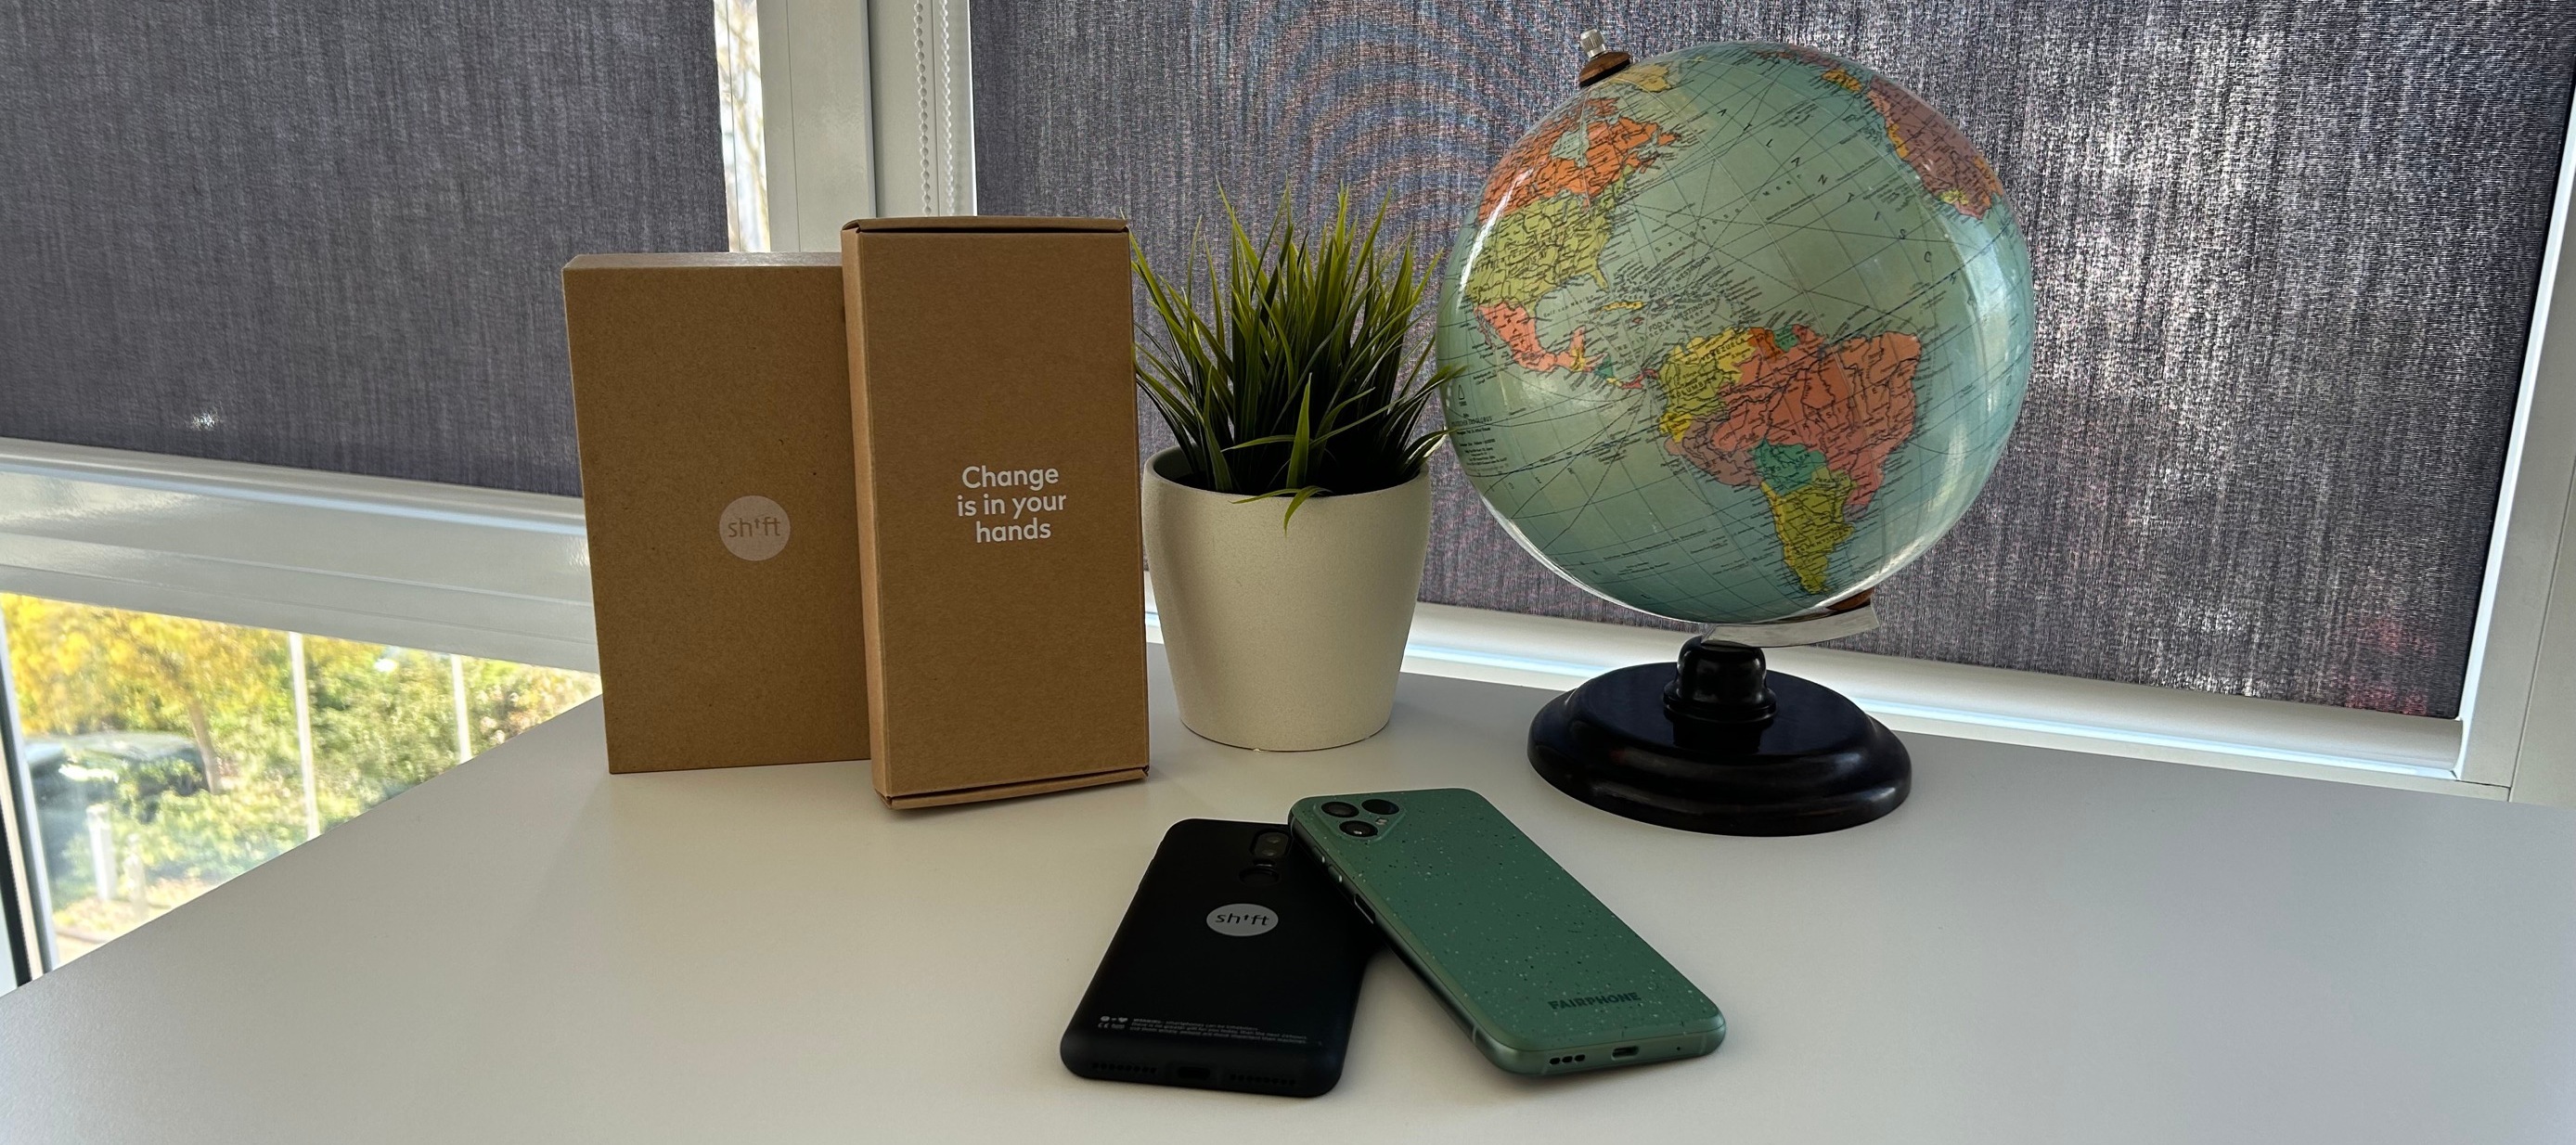 Fairphone 4 + SHIFT6mq - zwei Testgeräte zum Earth Day!